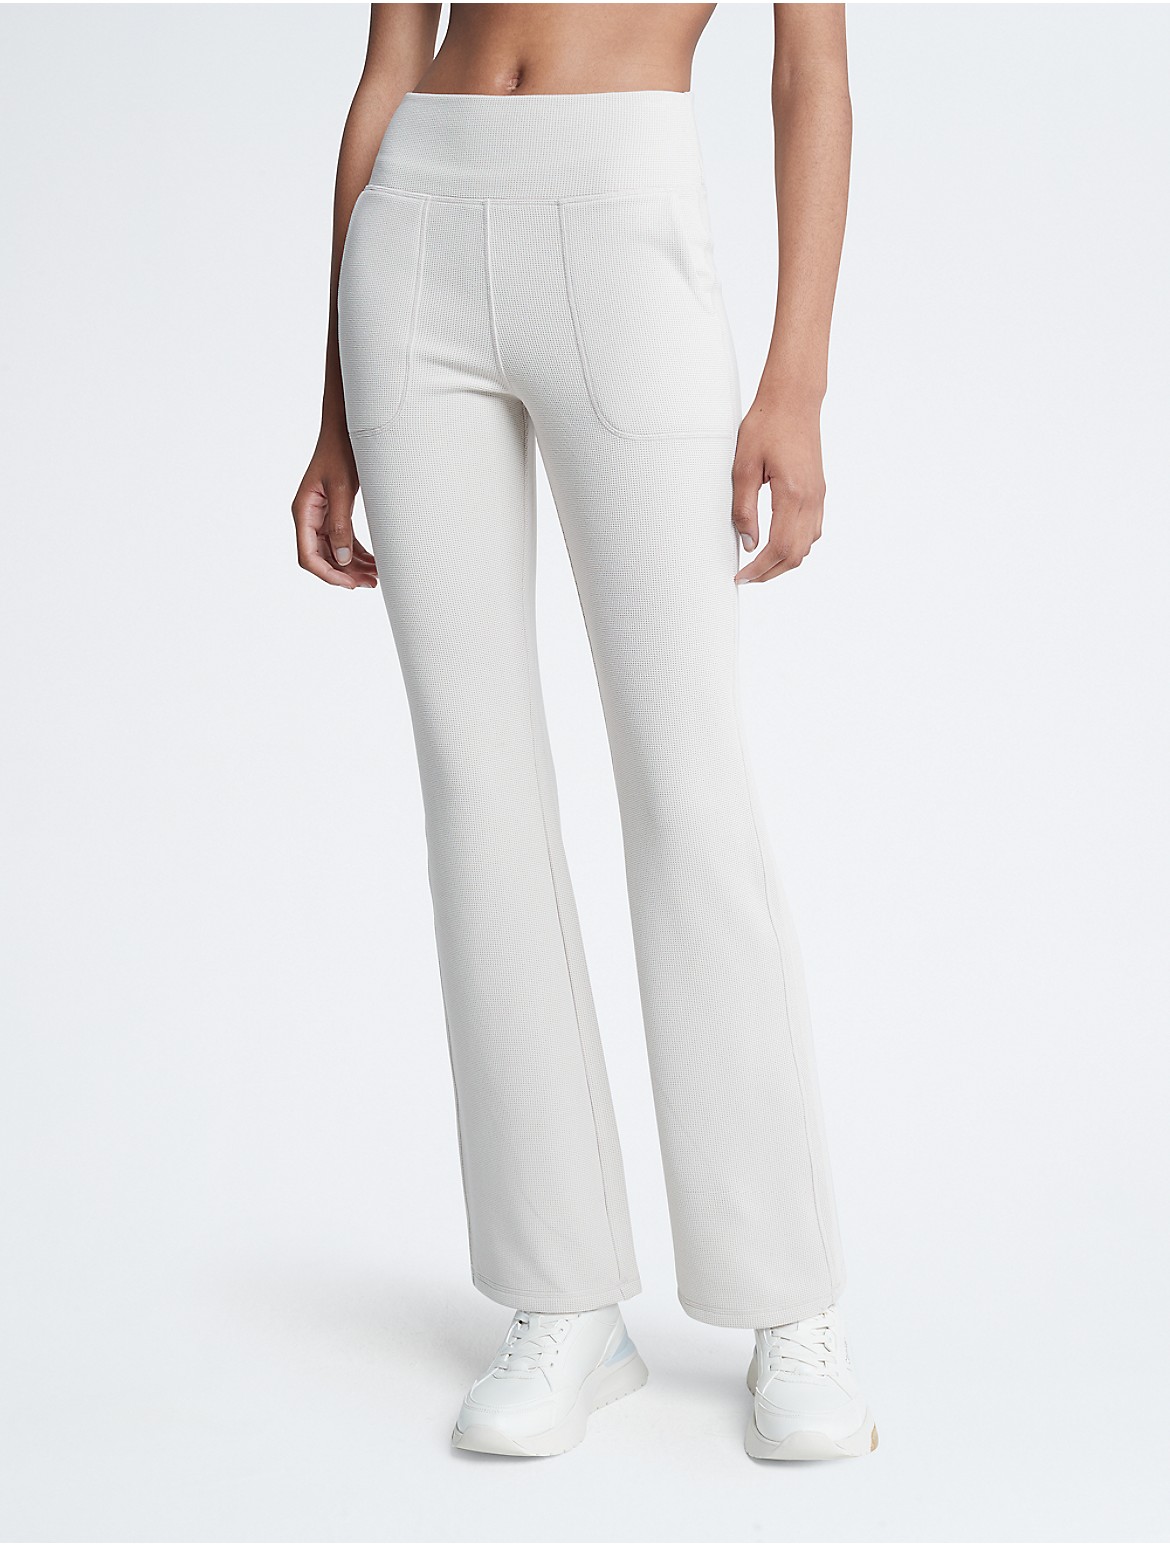 Calvin Klein Women's Performance High Waist Flared Pants - White - XL